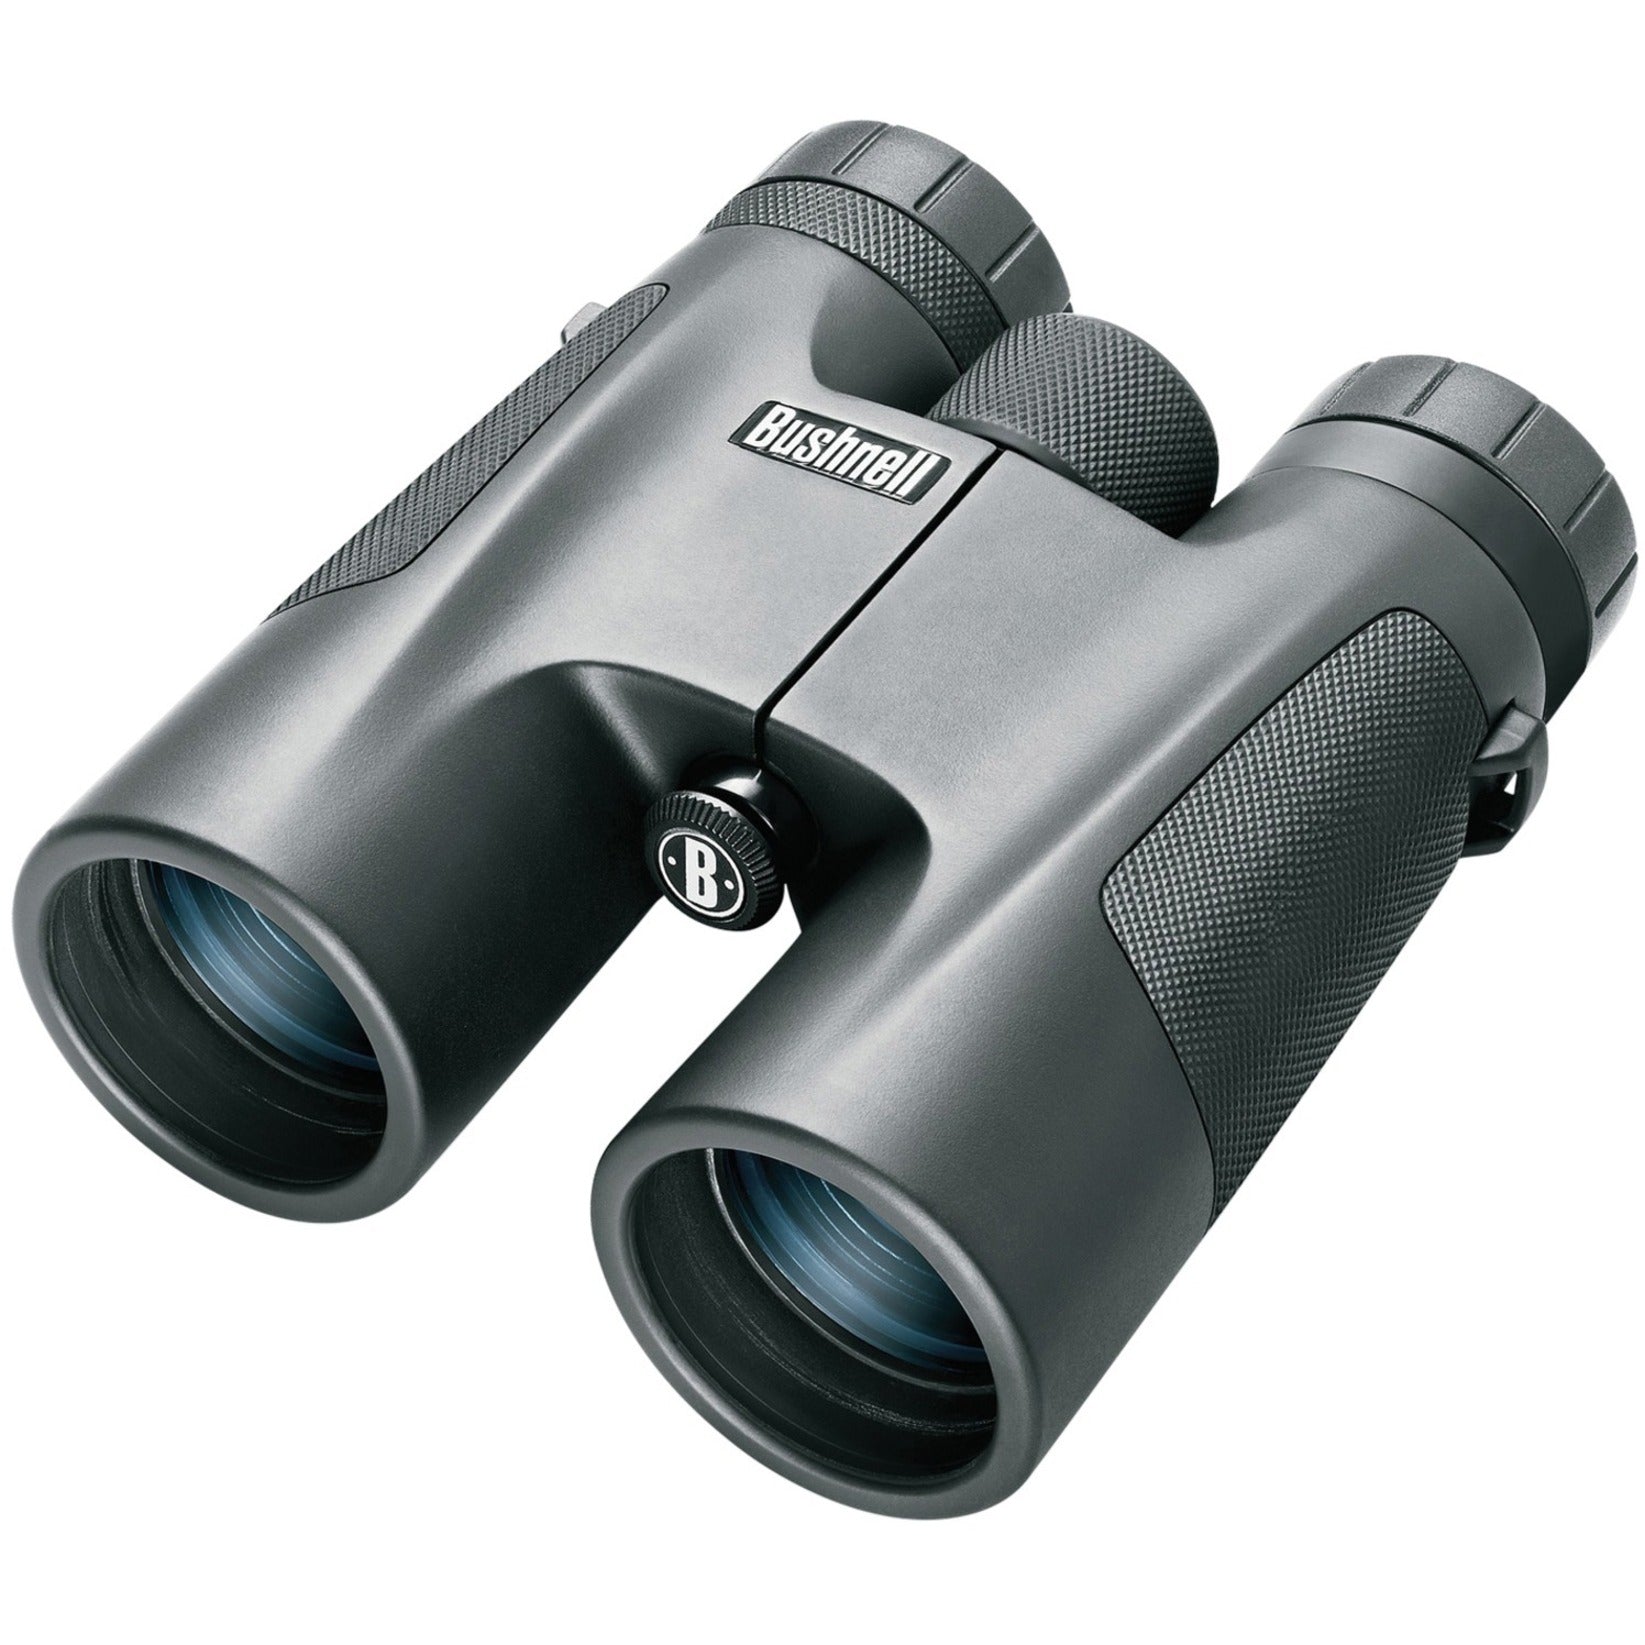 Bushnell 141042 PowerView 10x42 Binocular, Lifetime Warranty, Hunting, Outdoor